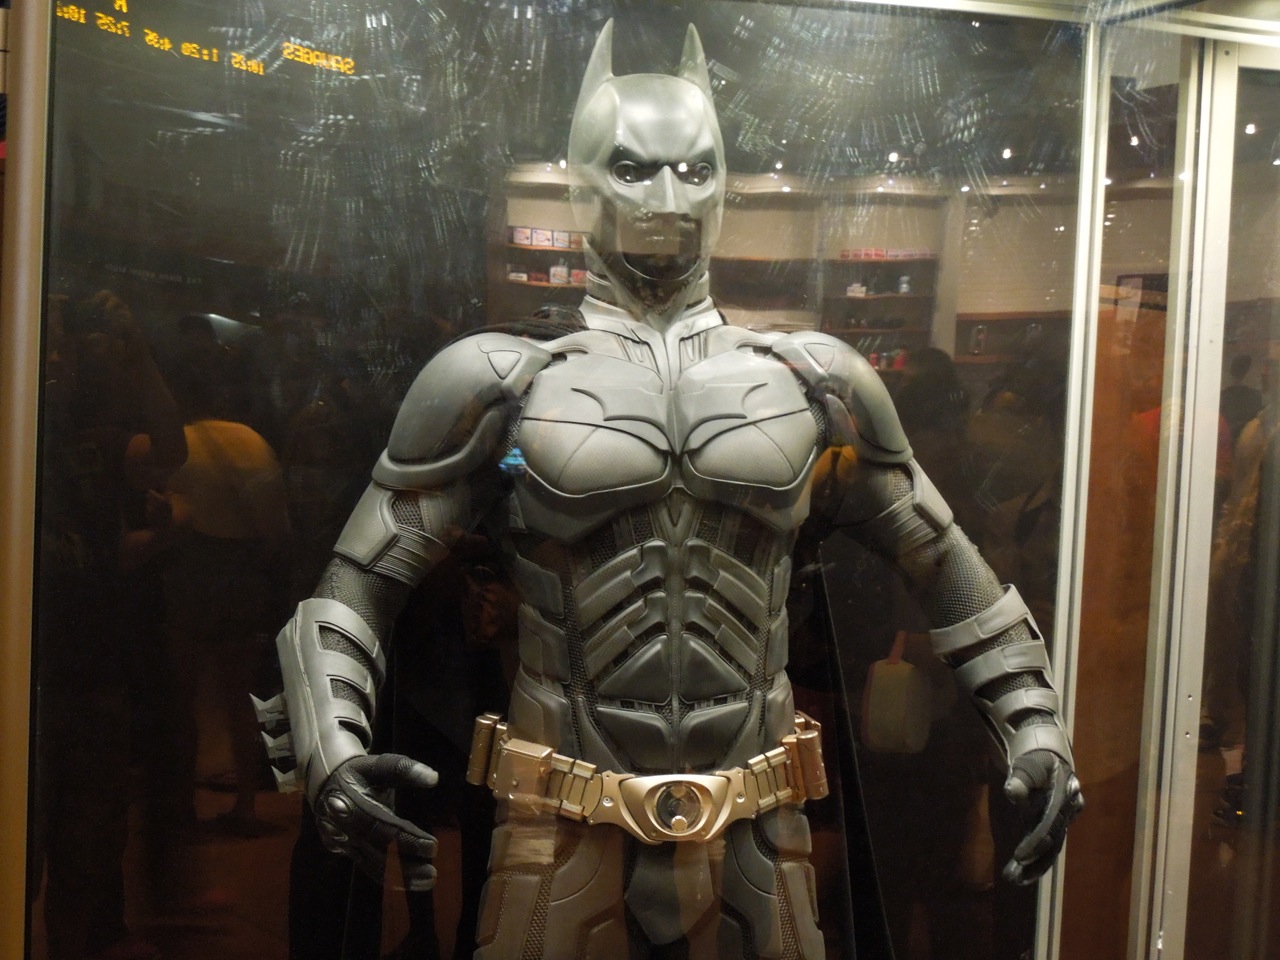 Batman+costume+DarkKnightRises.jpg